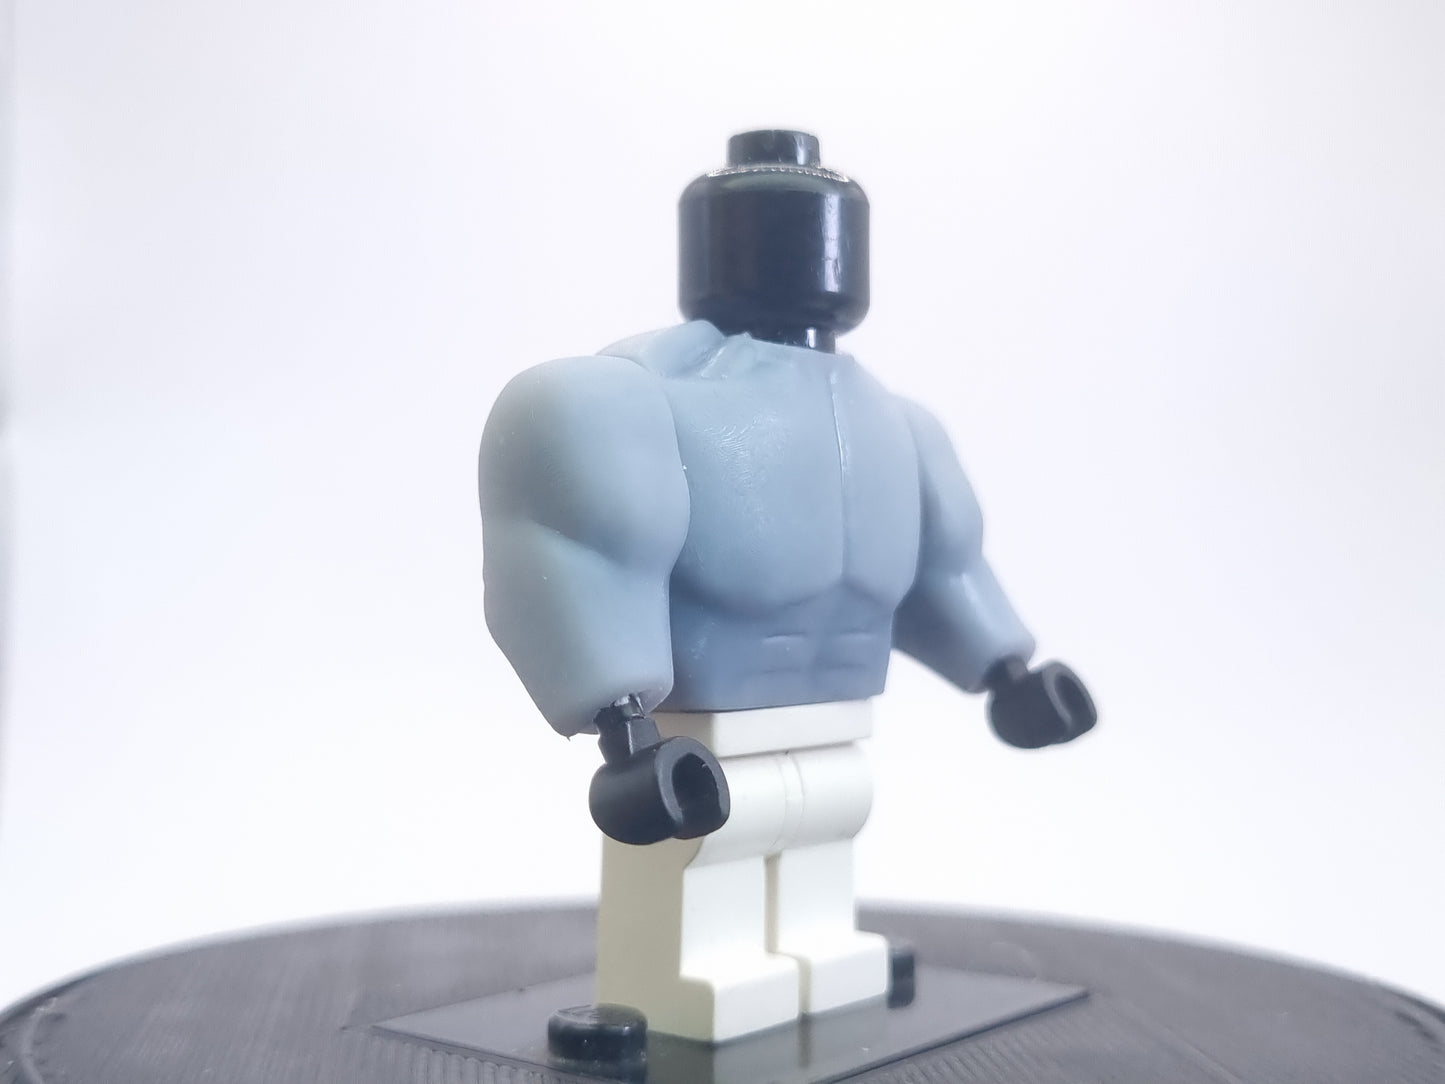 Lego compatible custom 3D printed buffed body!